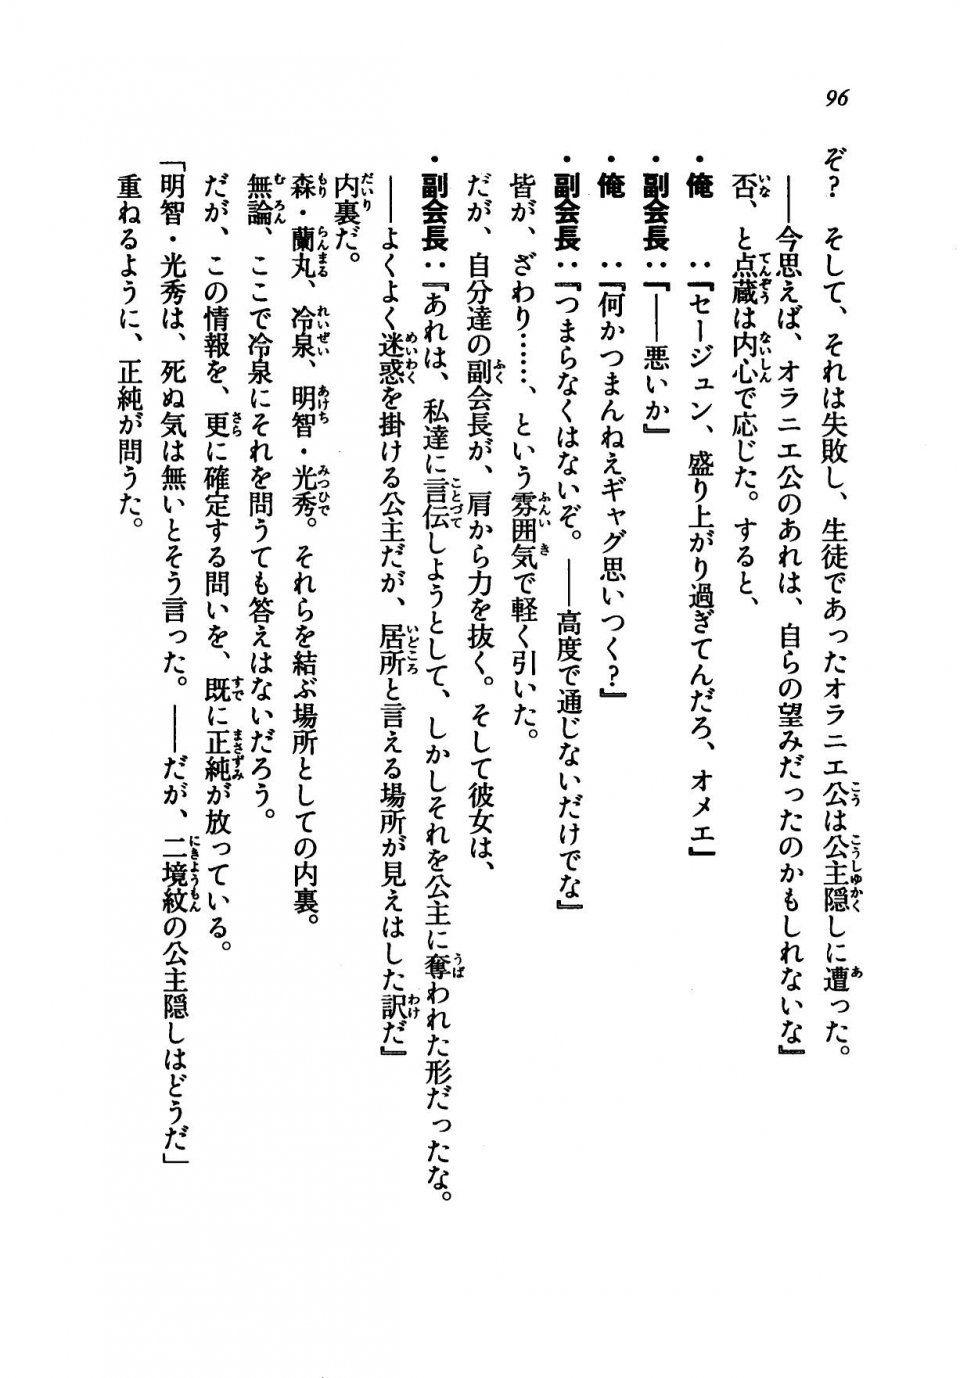 Kyoukai Senjou no Horizon LN Vol 21(8C) Part 1 - Photo #95